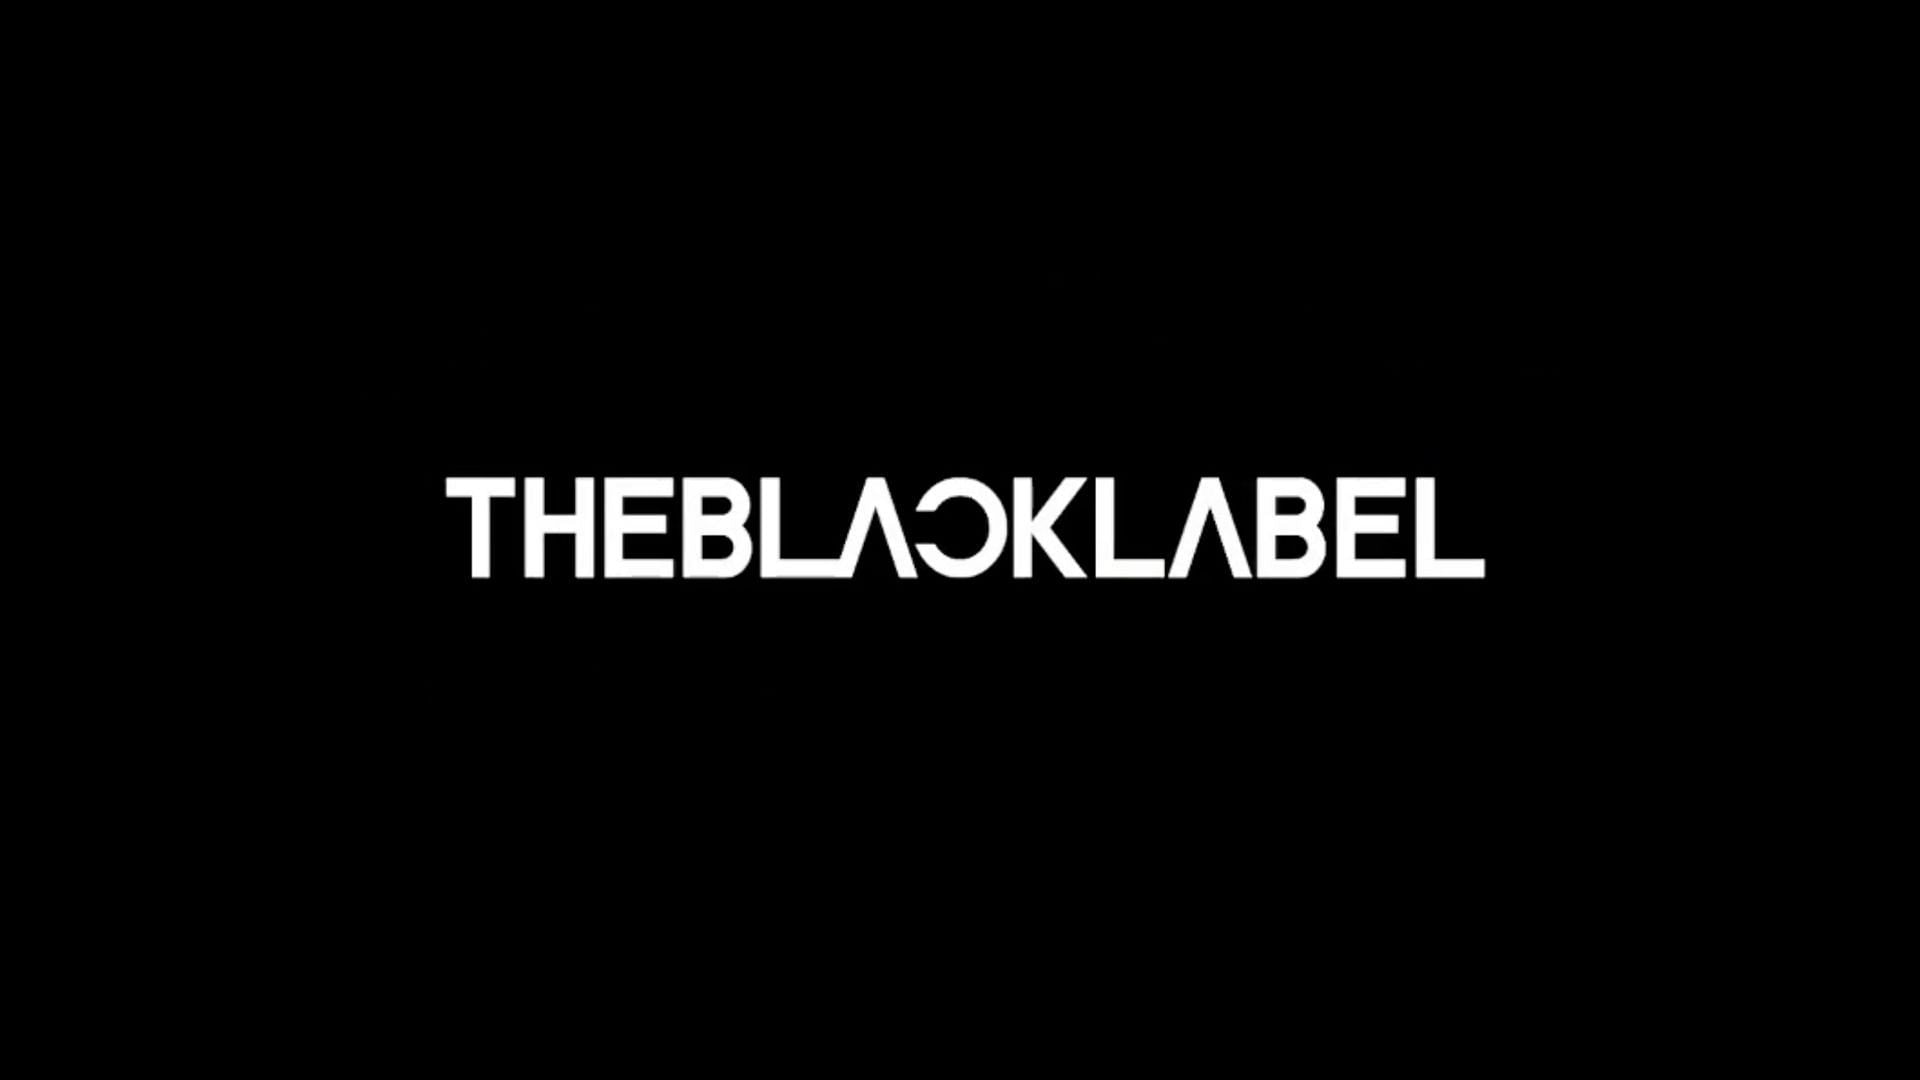 THE BLACK LABEL (Image via Instagram/@theblacklabel)